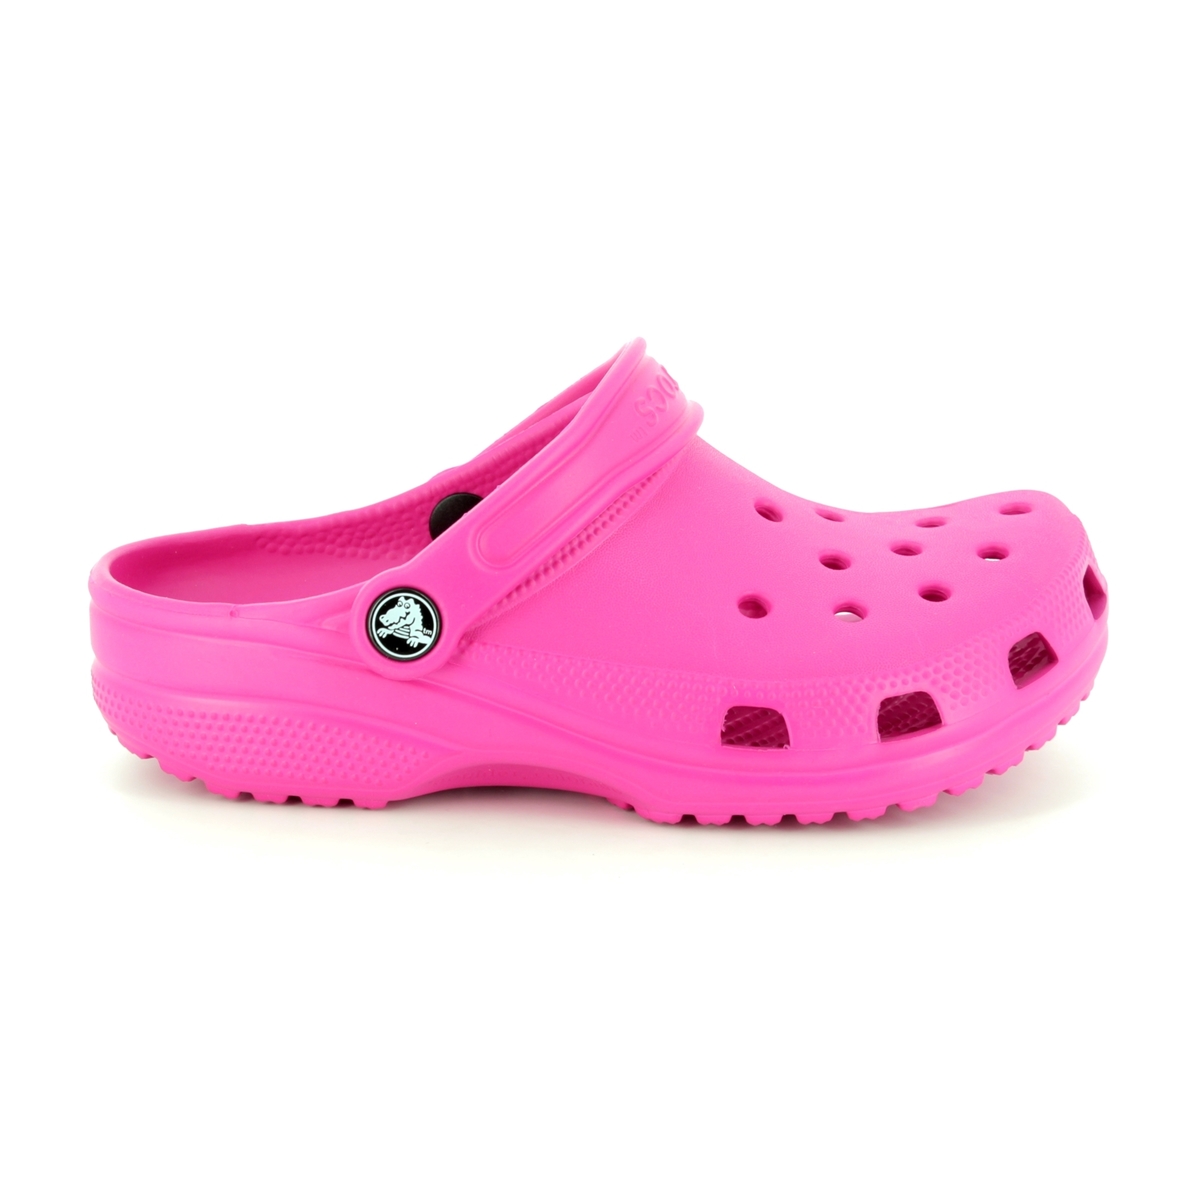 Crocs Classic Clog K 204536 6x0 Pink Shoes 1523008266 992453660 02 